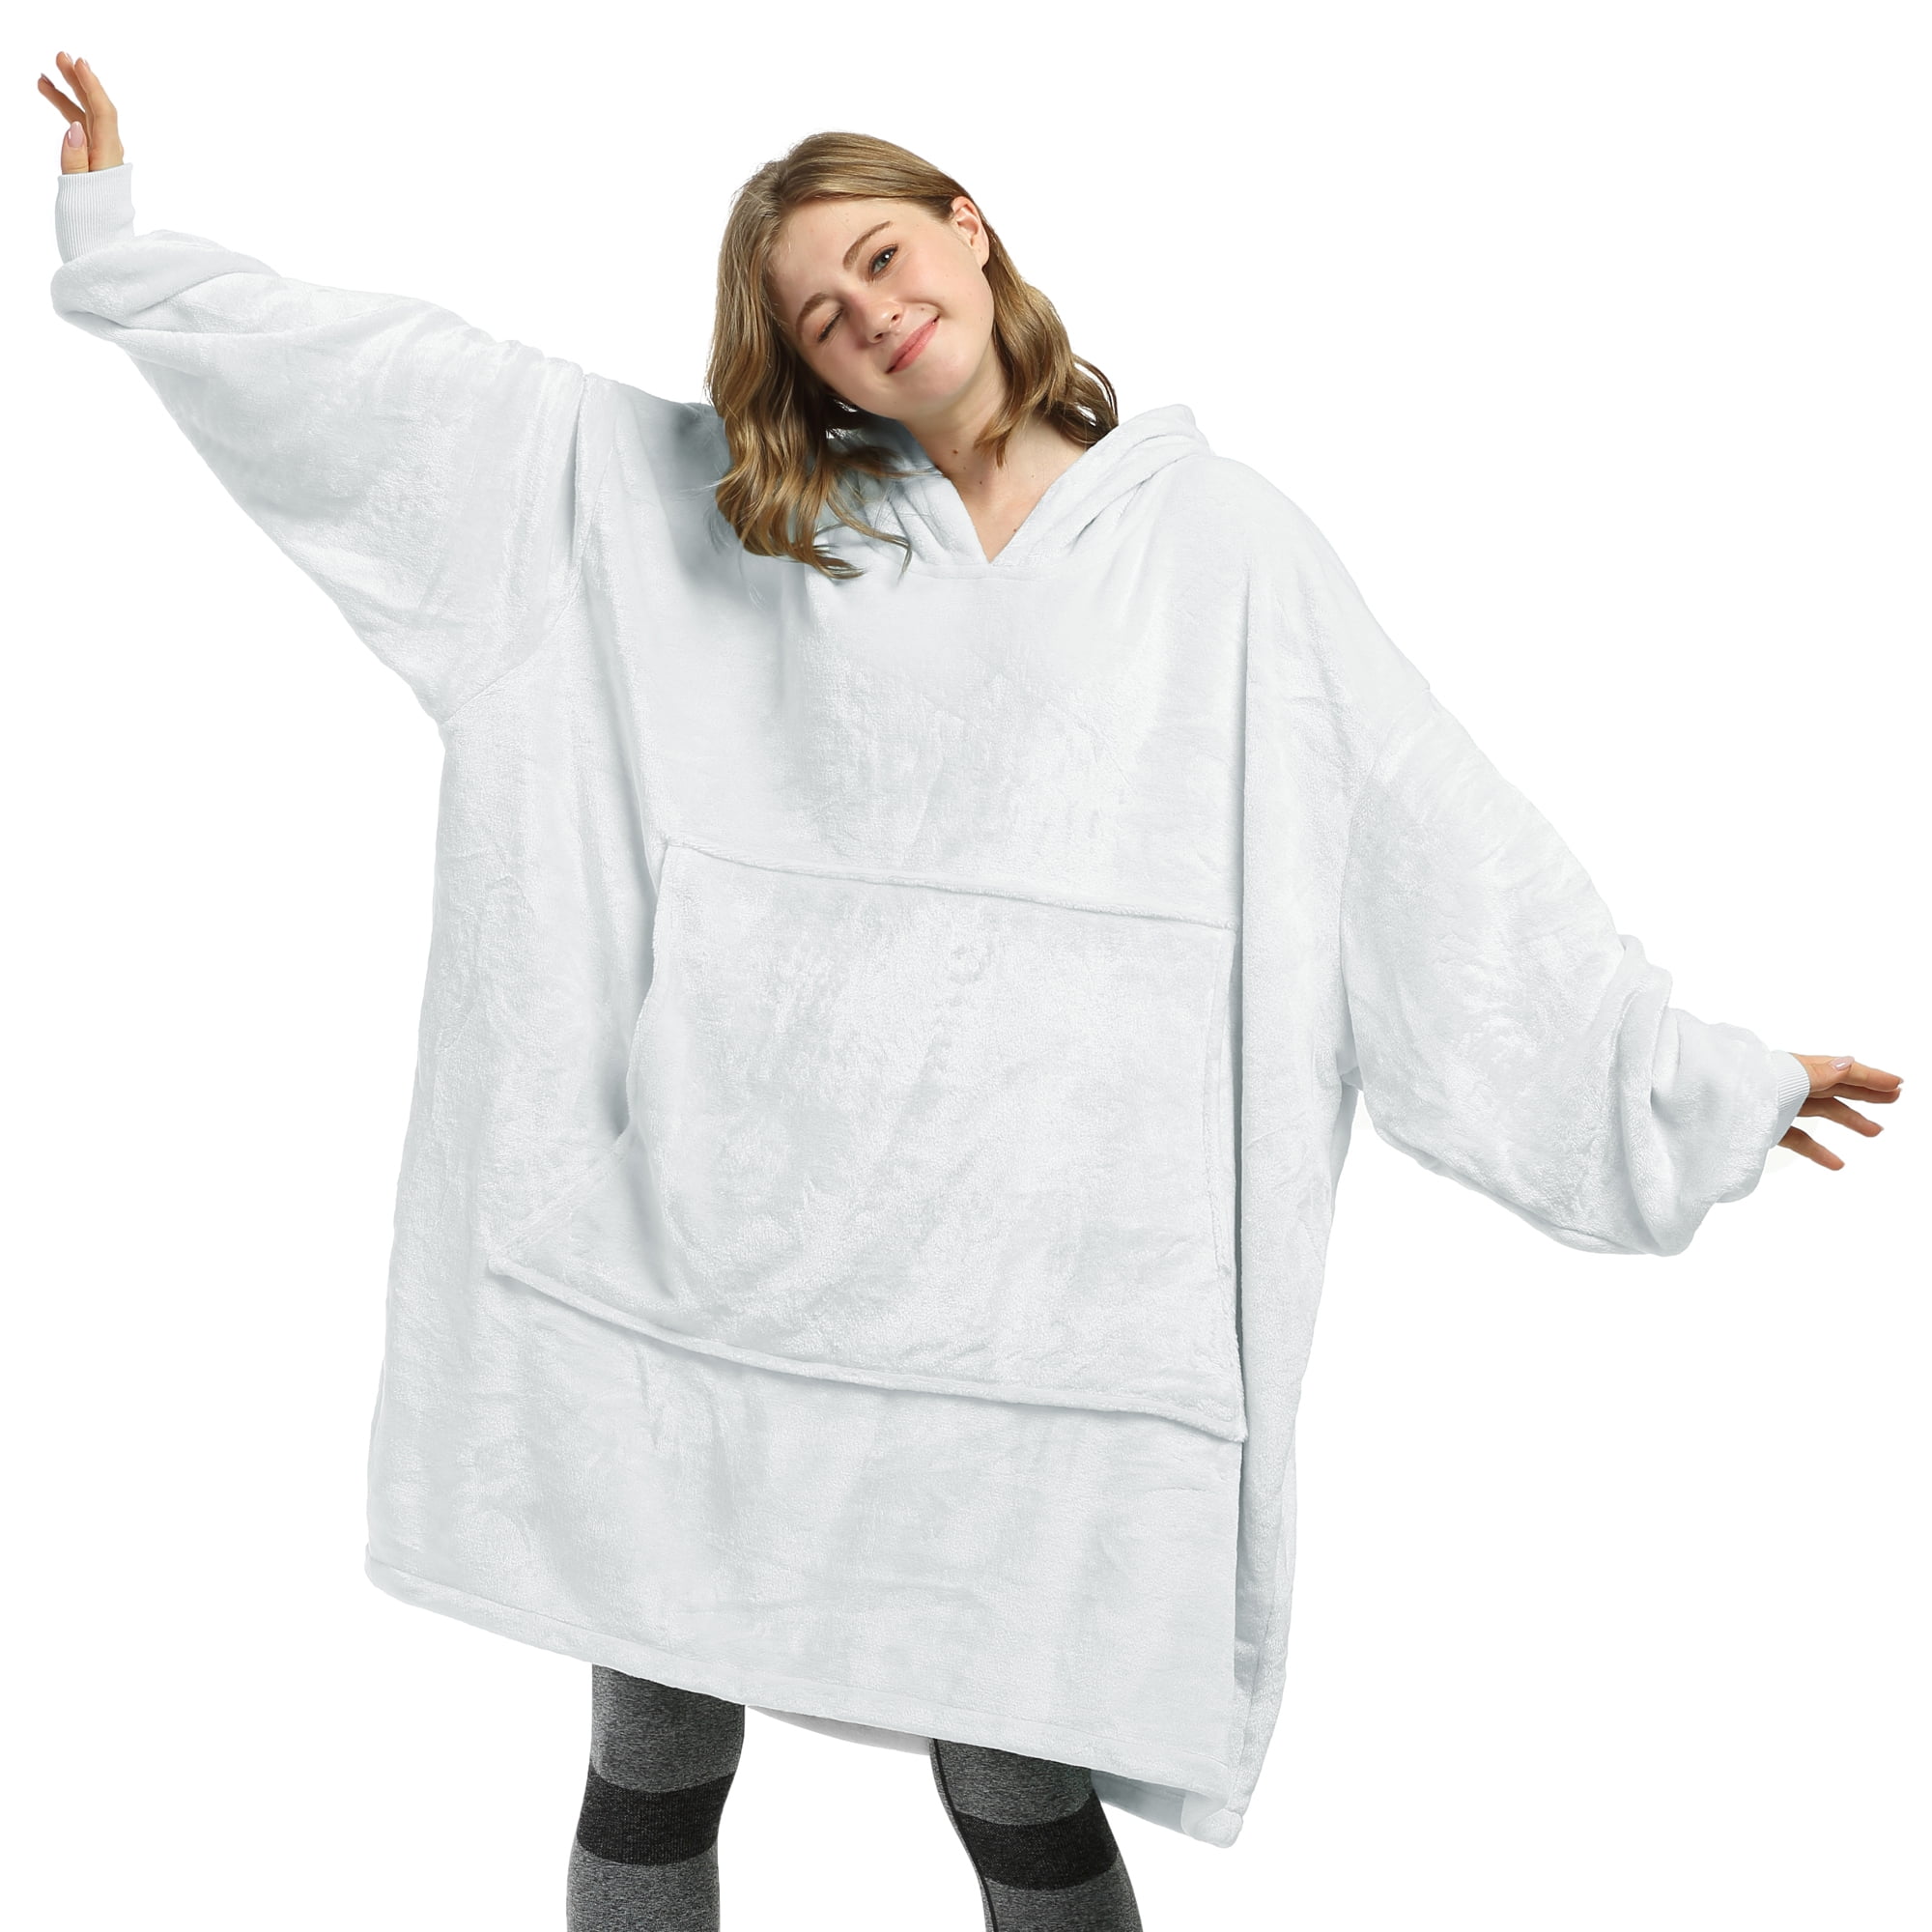 Catalonia Oversized Blanket Hoodie Sweatshirt, Giant Fleece Pullover with  Large Front Pocket, Super Soft Warm Comfortable for Adults Men Women  Teenagers Kids Wife Girlfriend, Grey 